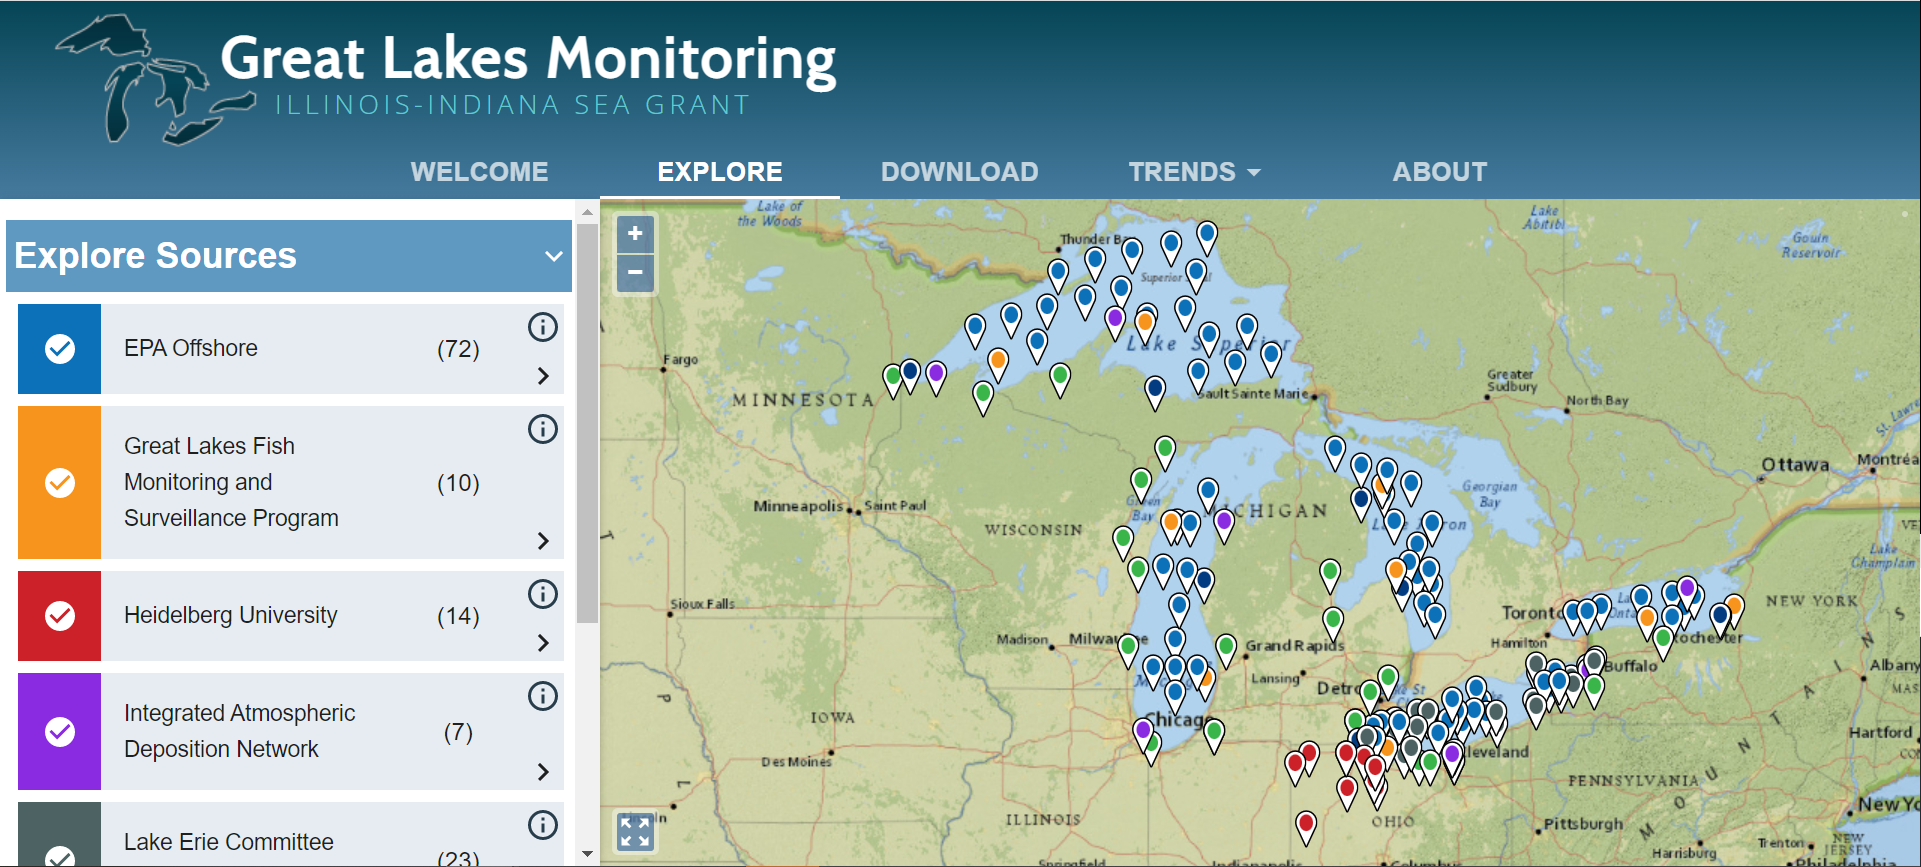 Great Lakes Monitoring by Illinois-Indiana Sea Grant